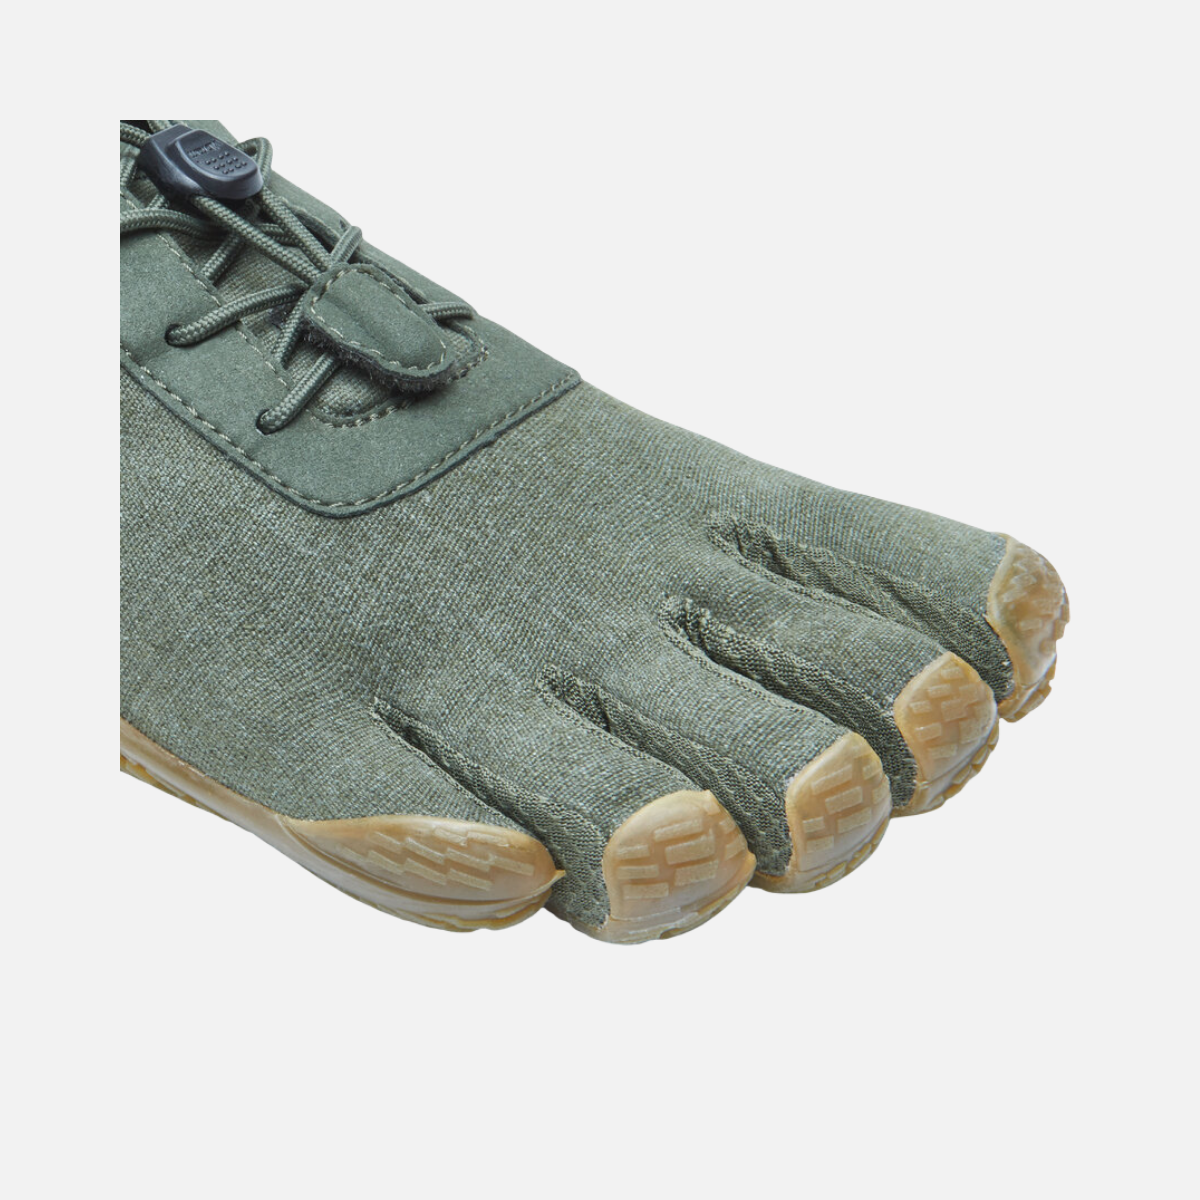 Vibram Kso Eco Mens Barefoot Training Footwear - Military Green